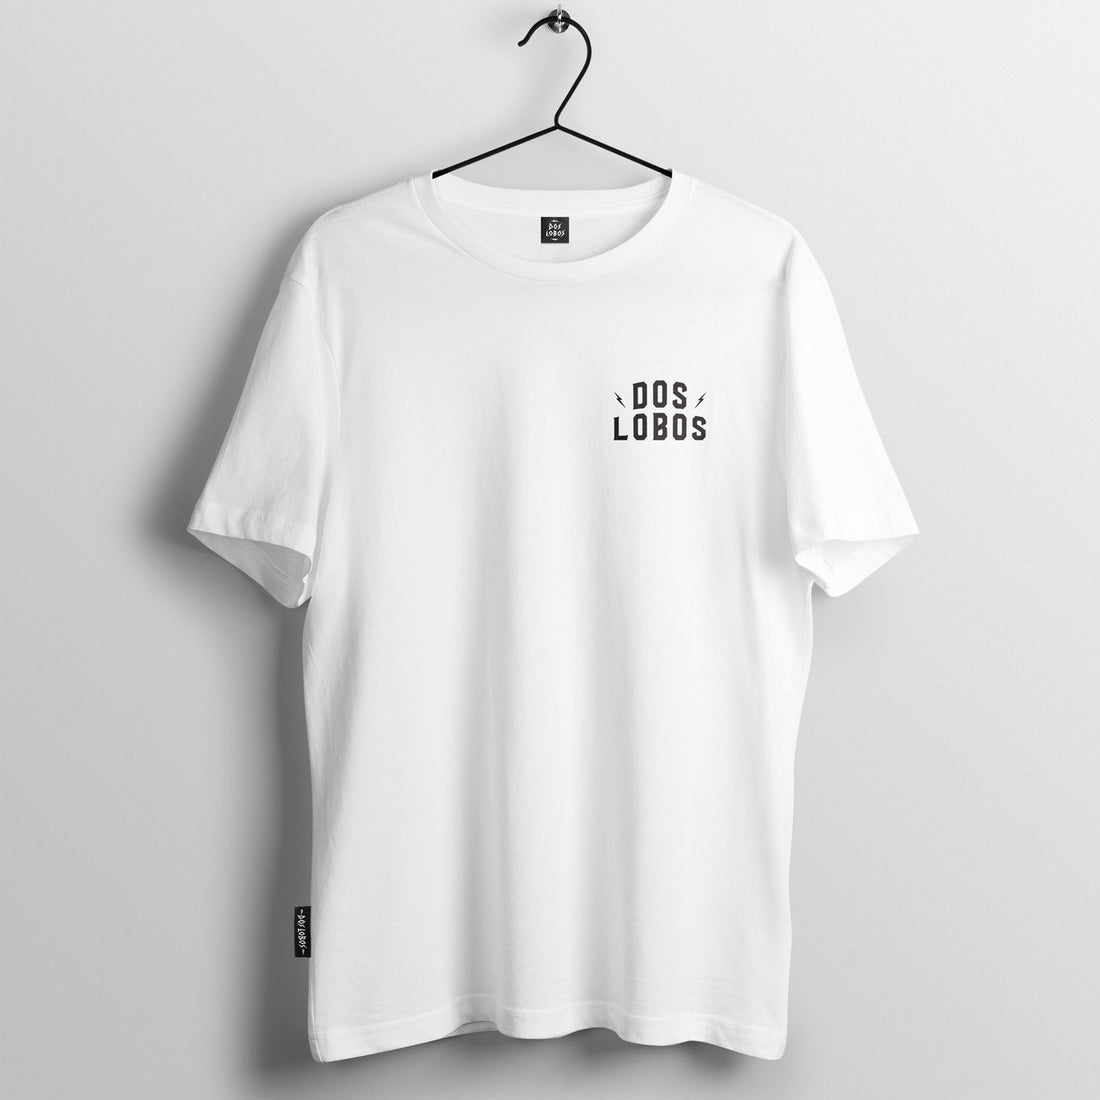 Short Sleeve Cotton T-Shirt By Dos Lobos -  Dos loBOS hIGH